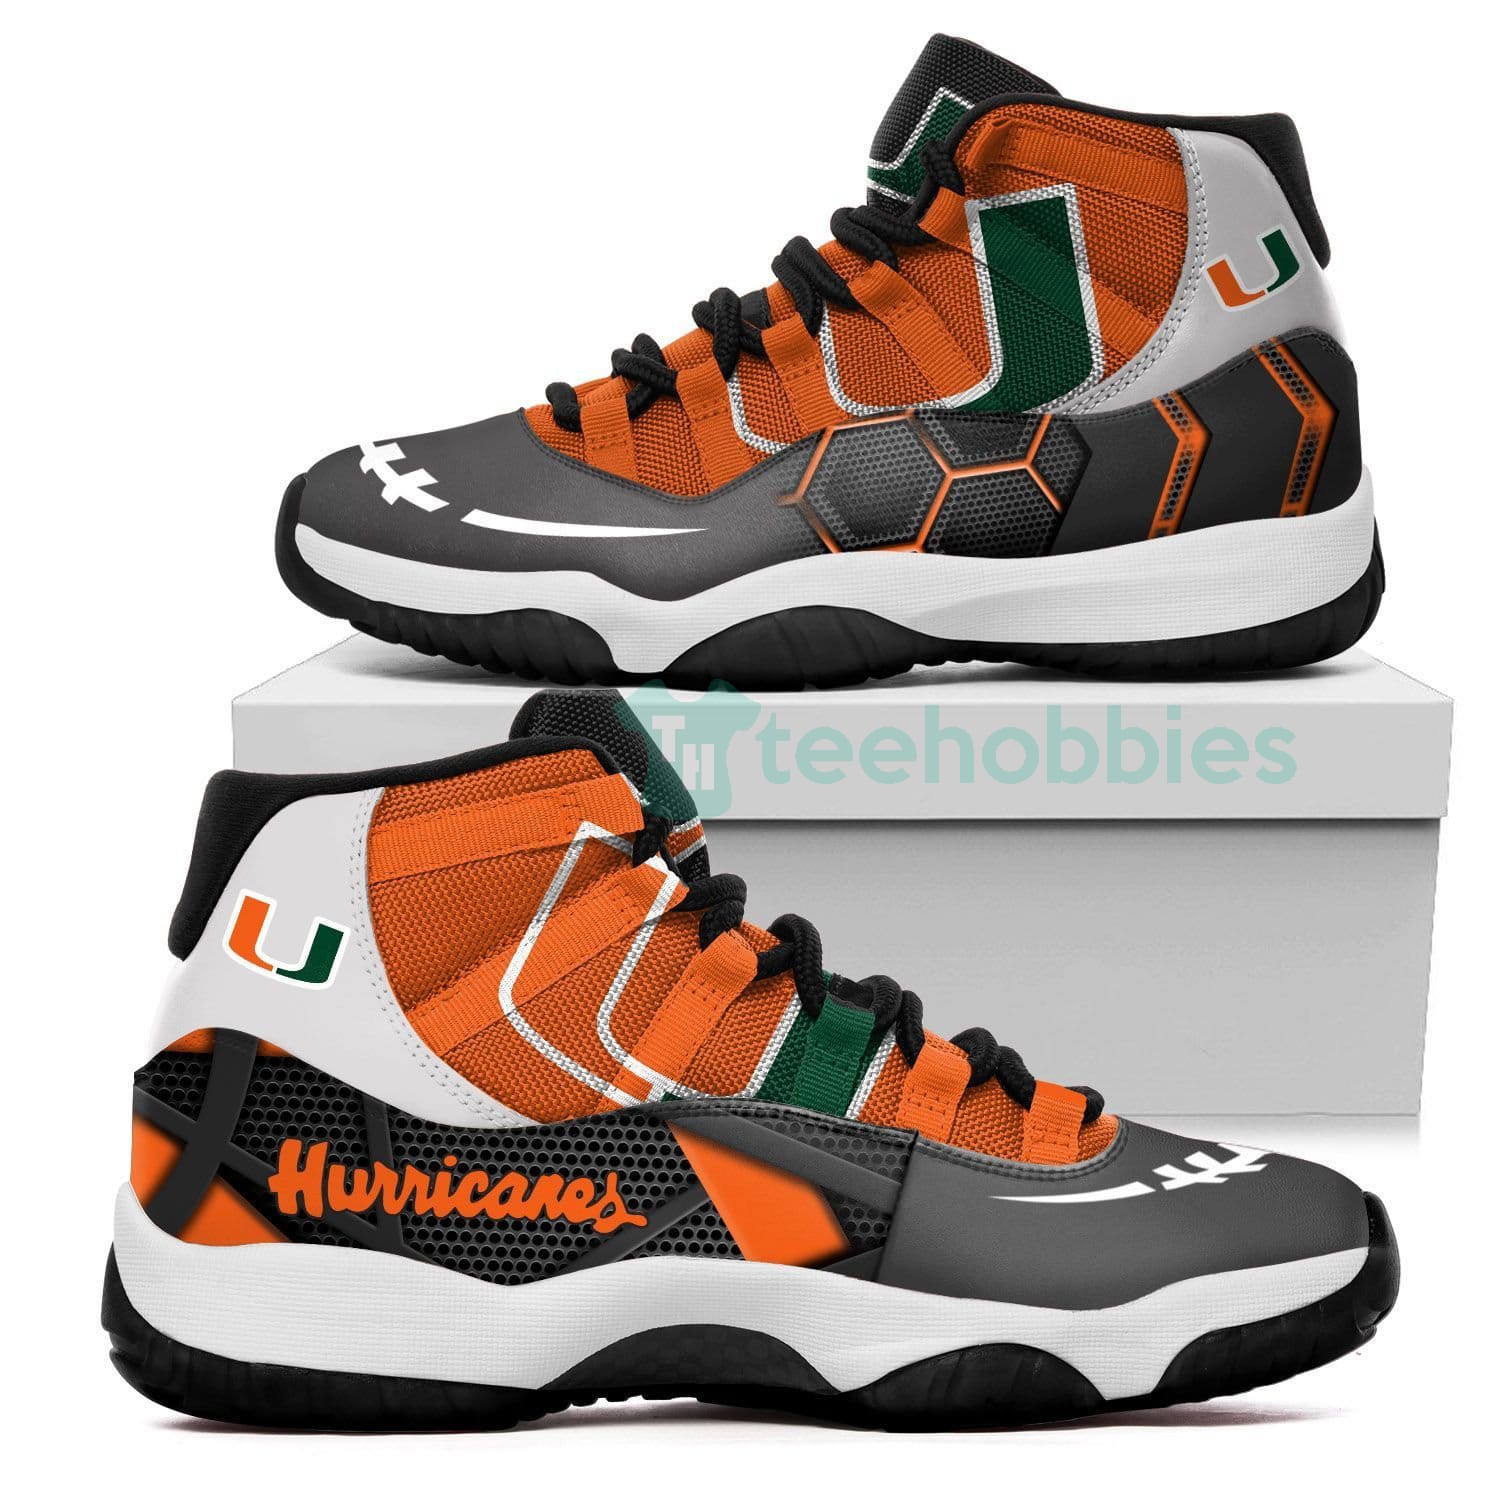 Miami Hurricanes New Air Jordan 11 Shoes Trending Product photo 1